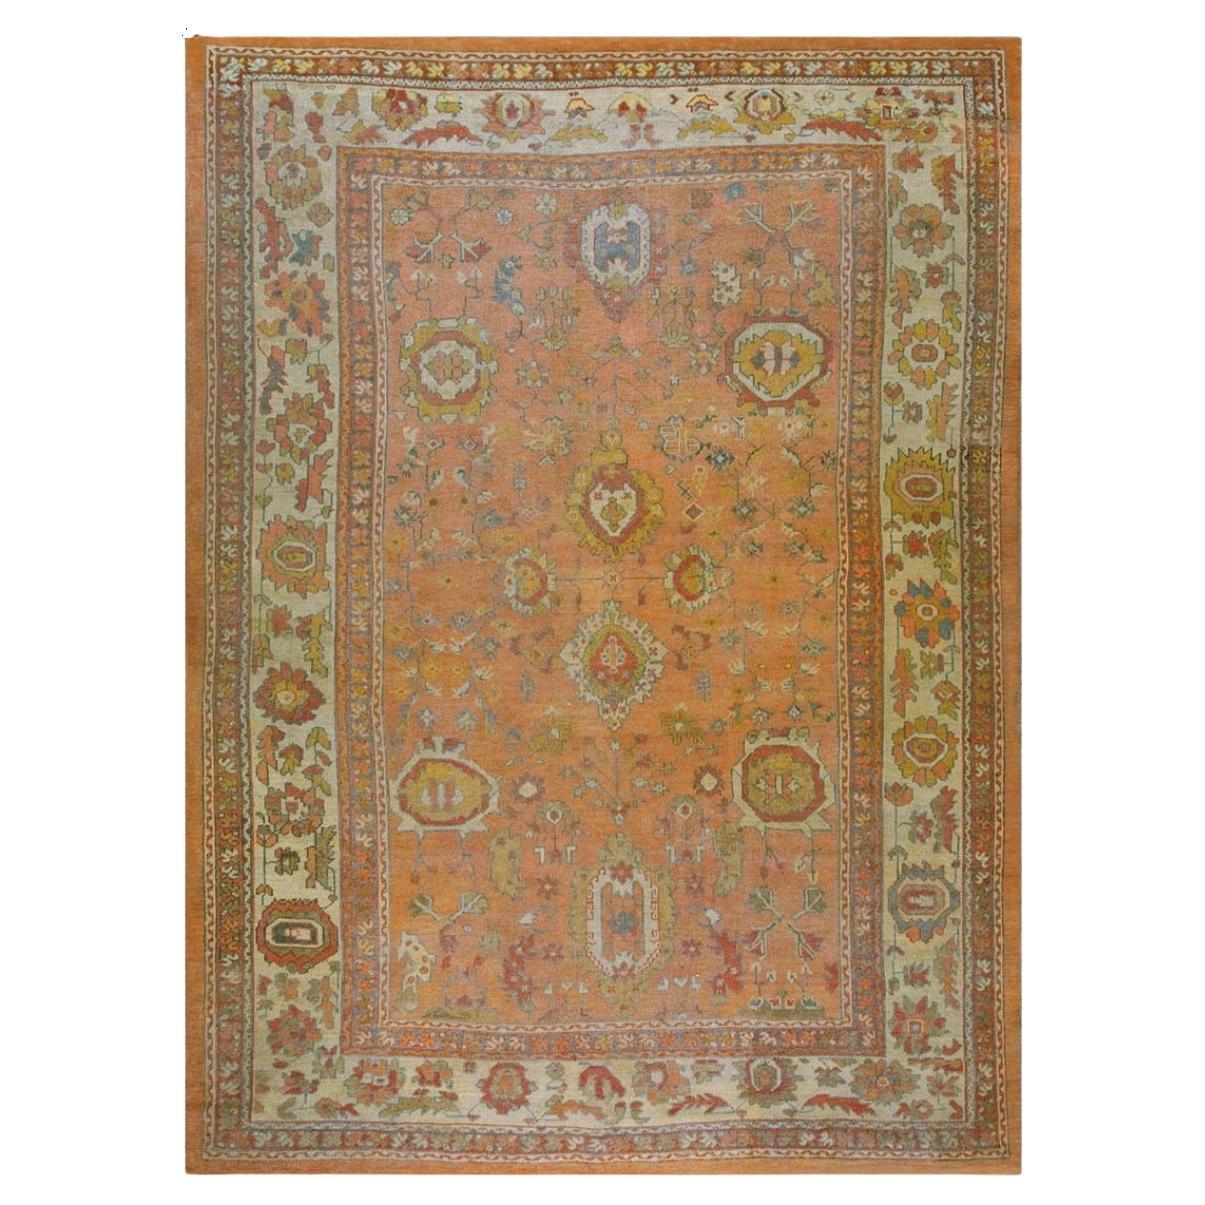 19th Century Turkish Oushak Carpet ( 9'3" x 12'10" - 282 x 391 )